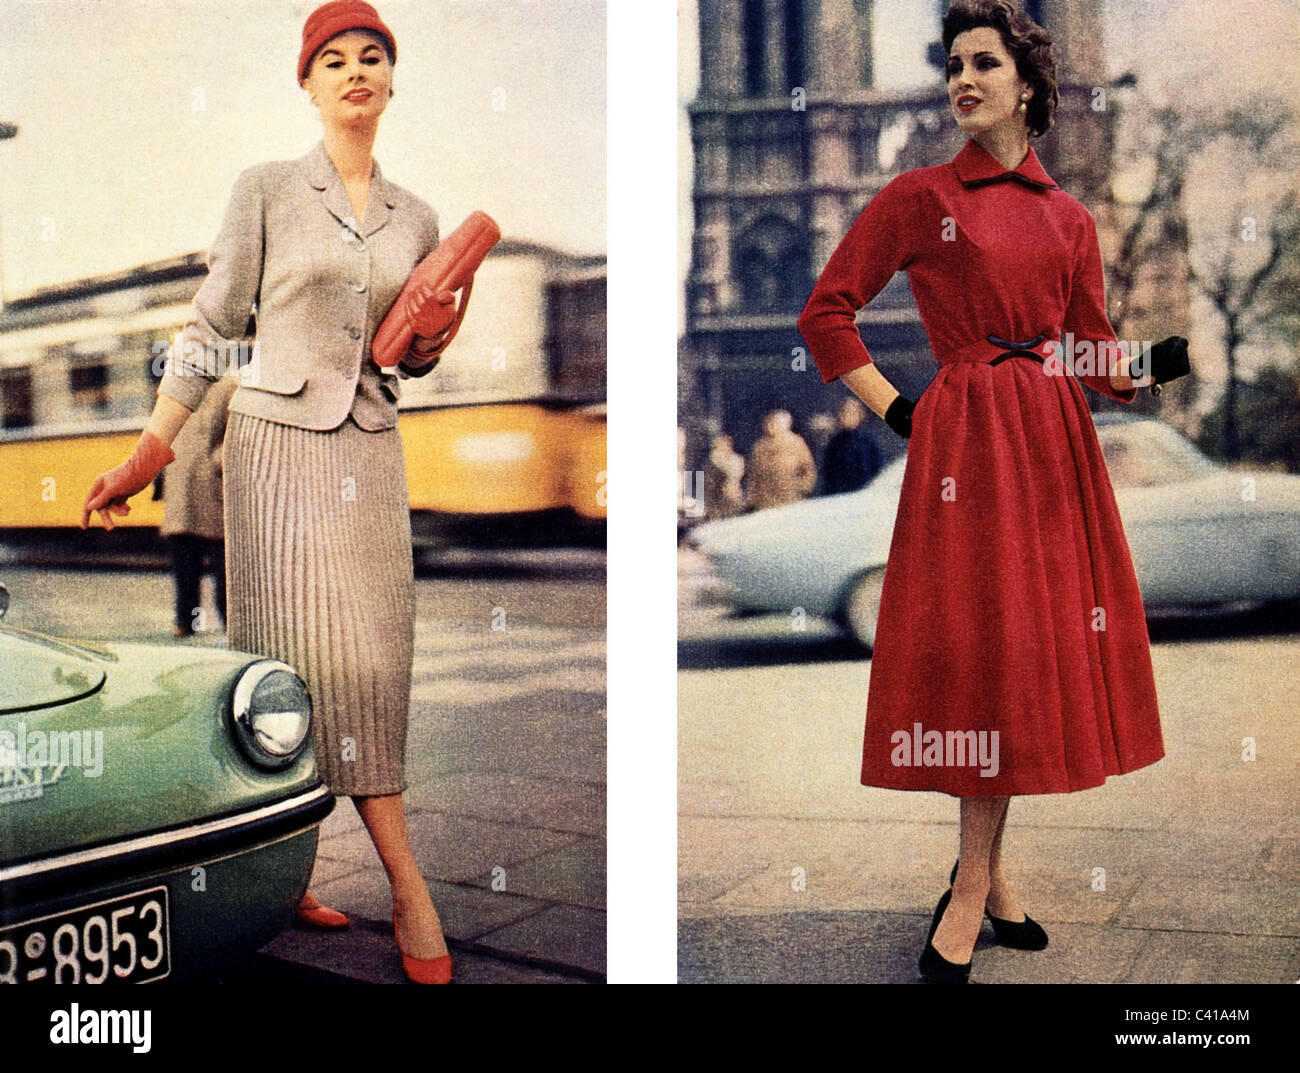 Mode, 50er Jahre, Damenmode, zwei Frauen auf Werbebildern, um 1957,  Additional-Rights-Clearences-not available Stockfotografie - Alamy